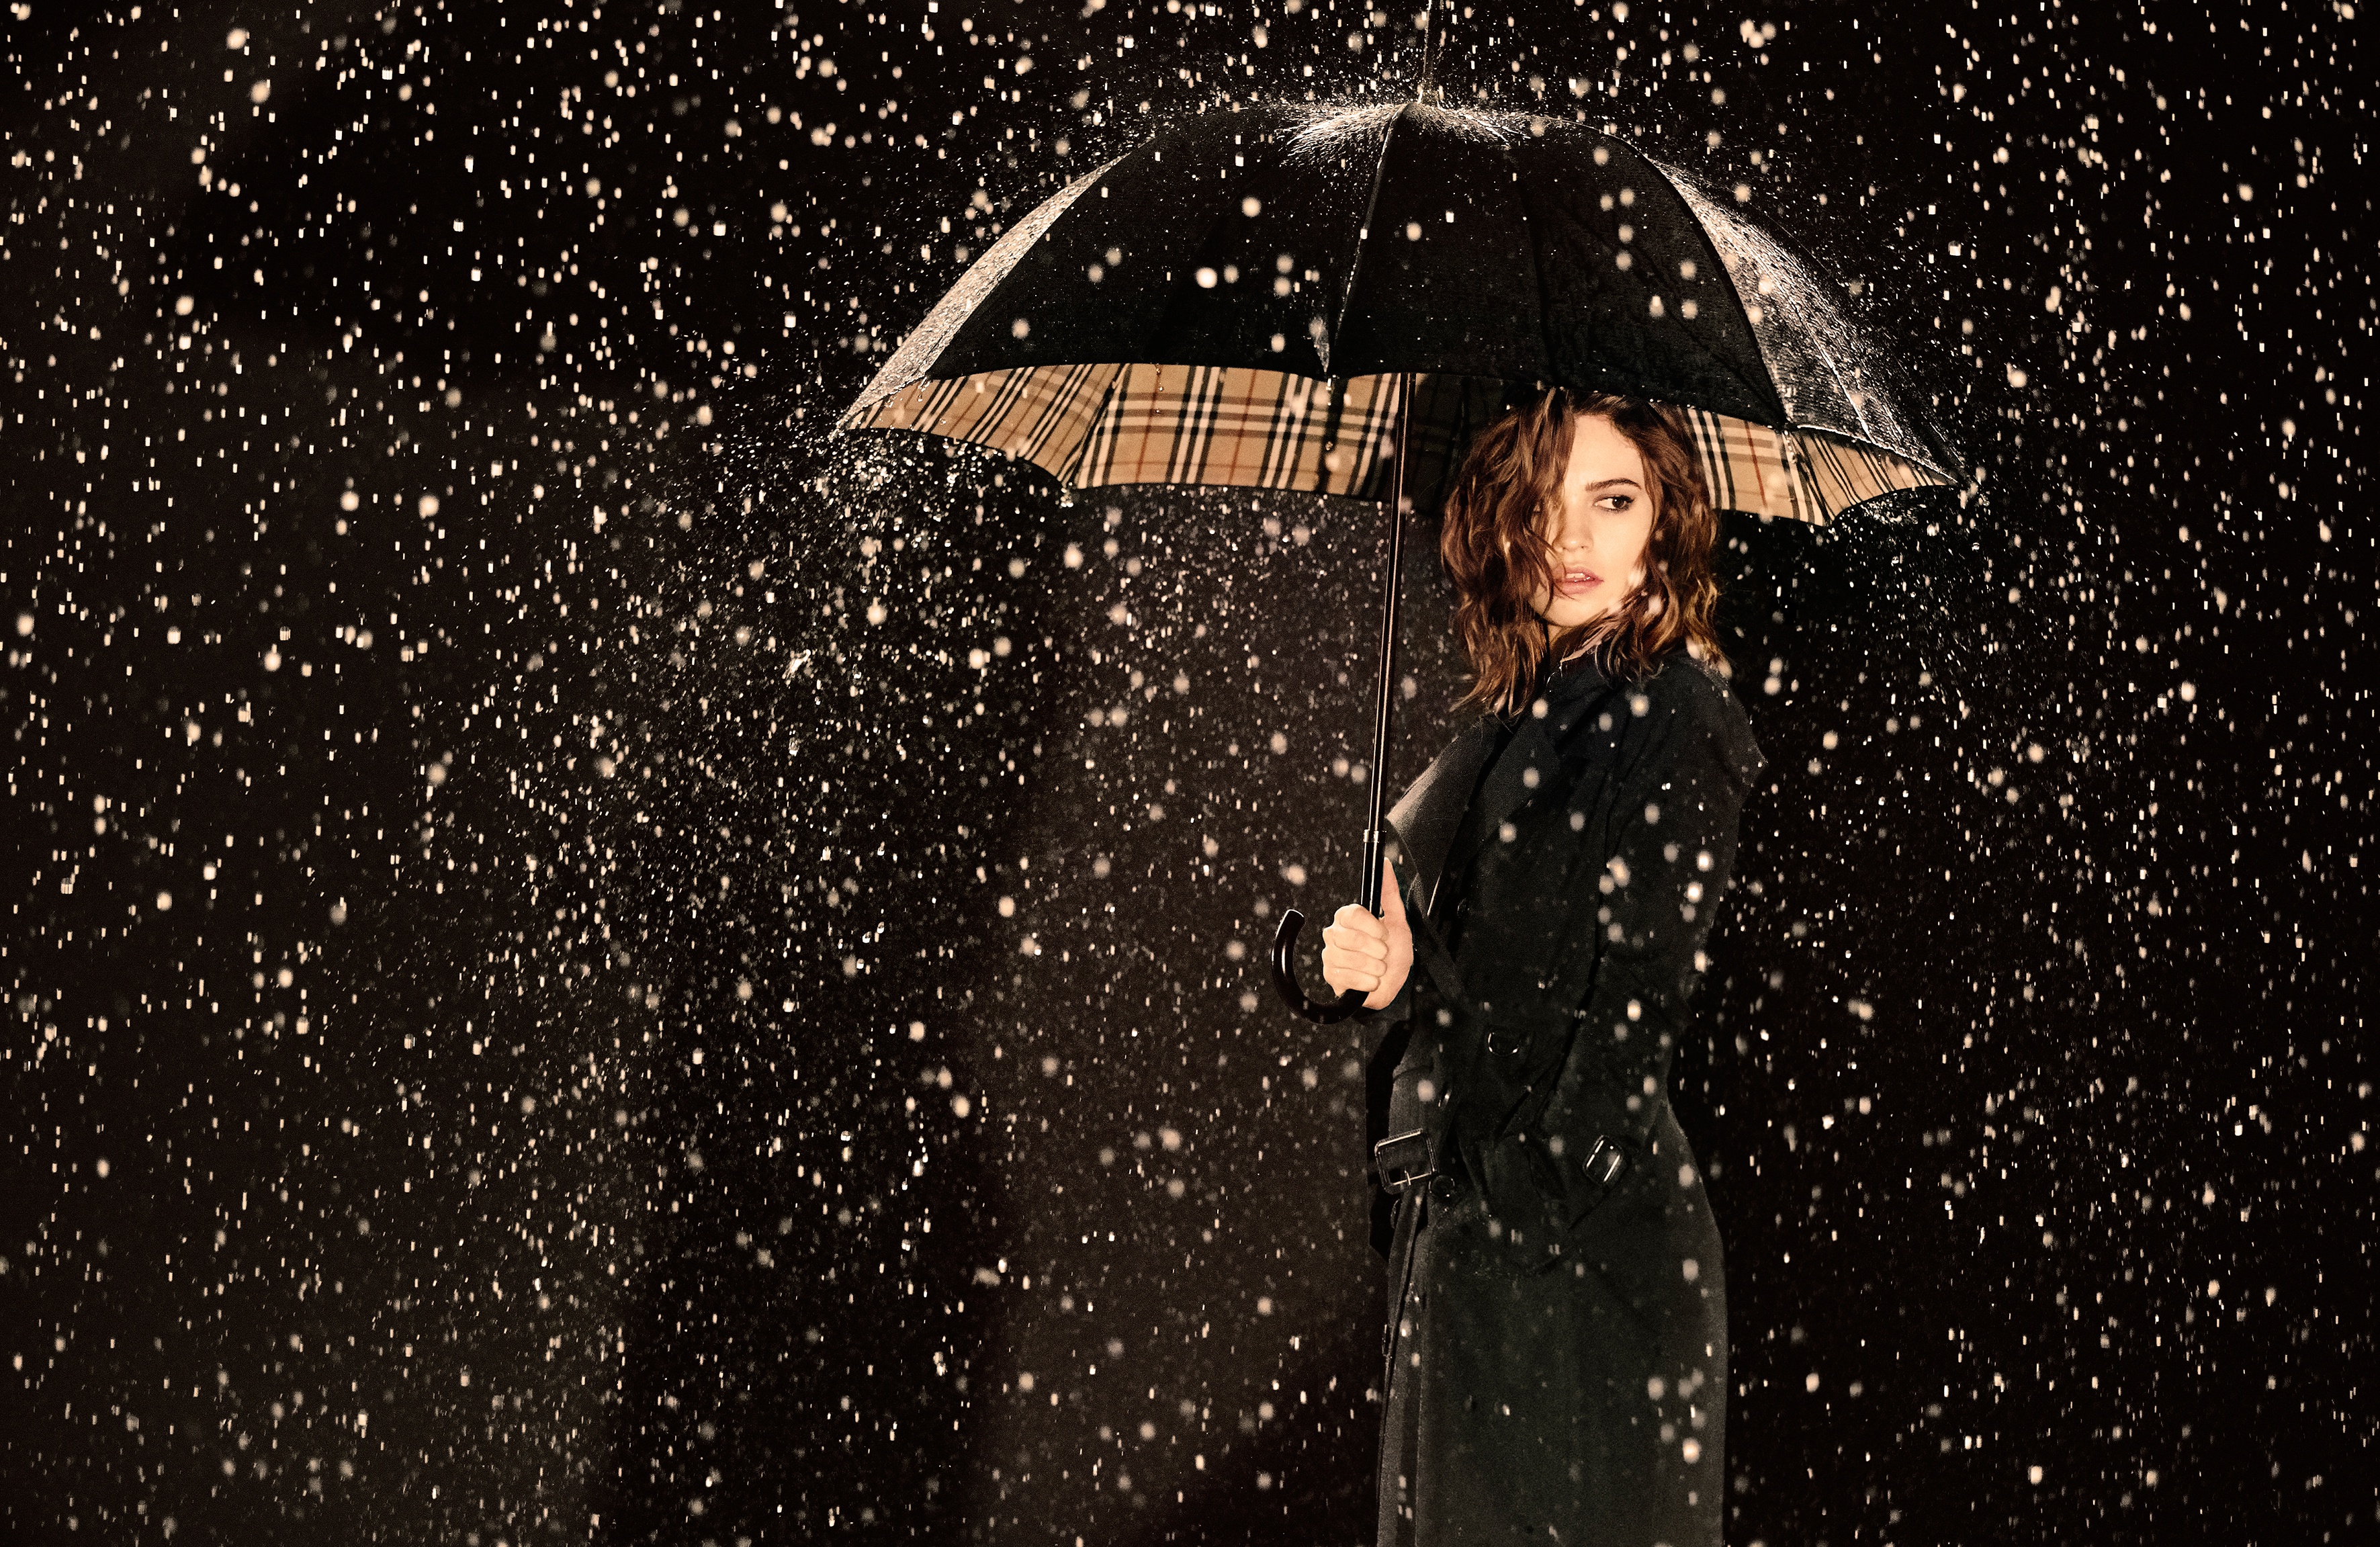 Плащ под дождь. Девушка под дождем. Человек под дождем. Девушка с зонтом под дождем.